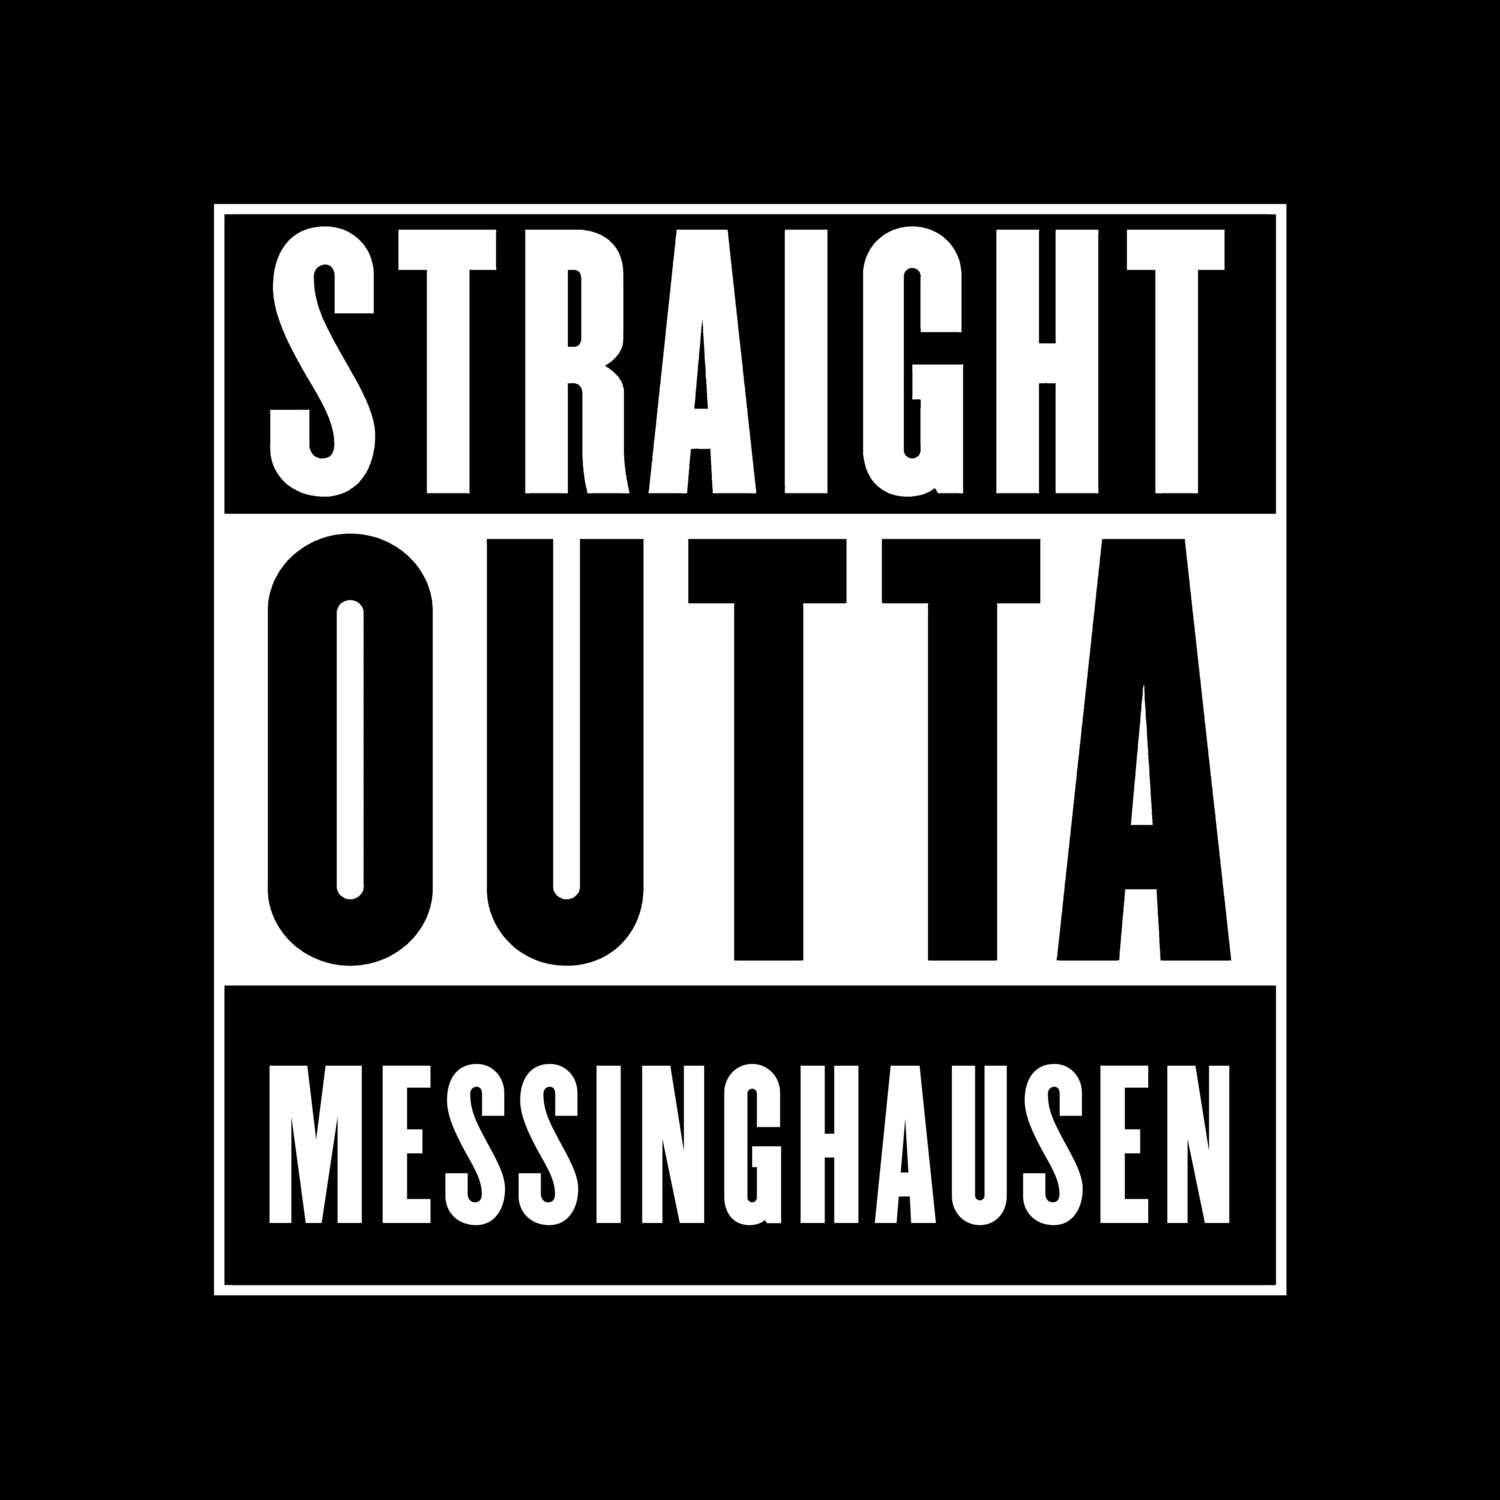 Messinghausen T-Shirt »Straight Outta«